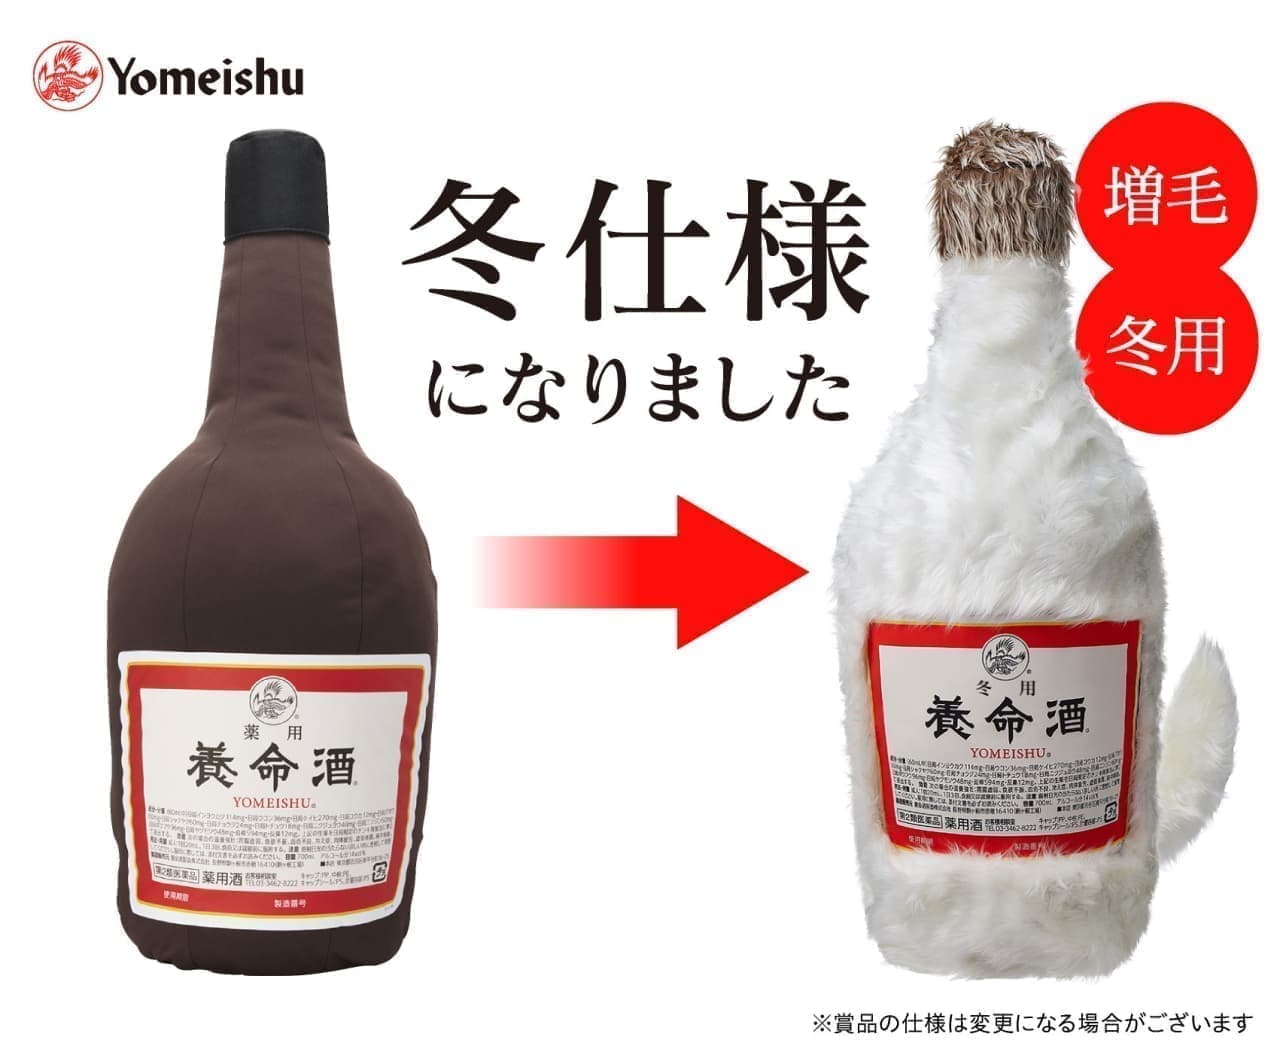 Yomeishu Sake Brewery "Yomeishu Winter is Hard Campaign"